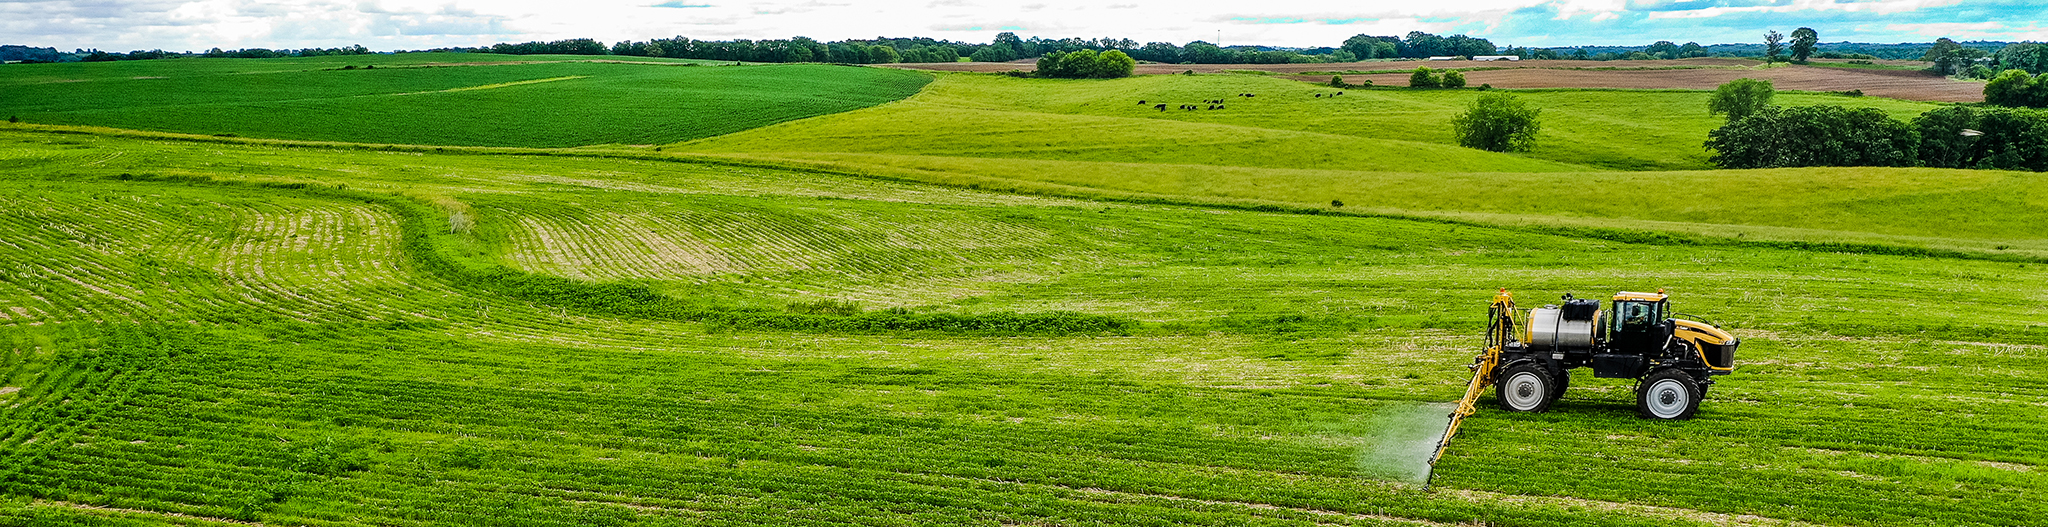 Lone sprayer in beautiful Minnesota green farm field